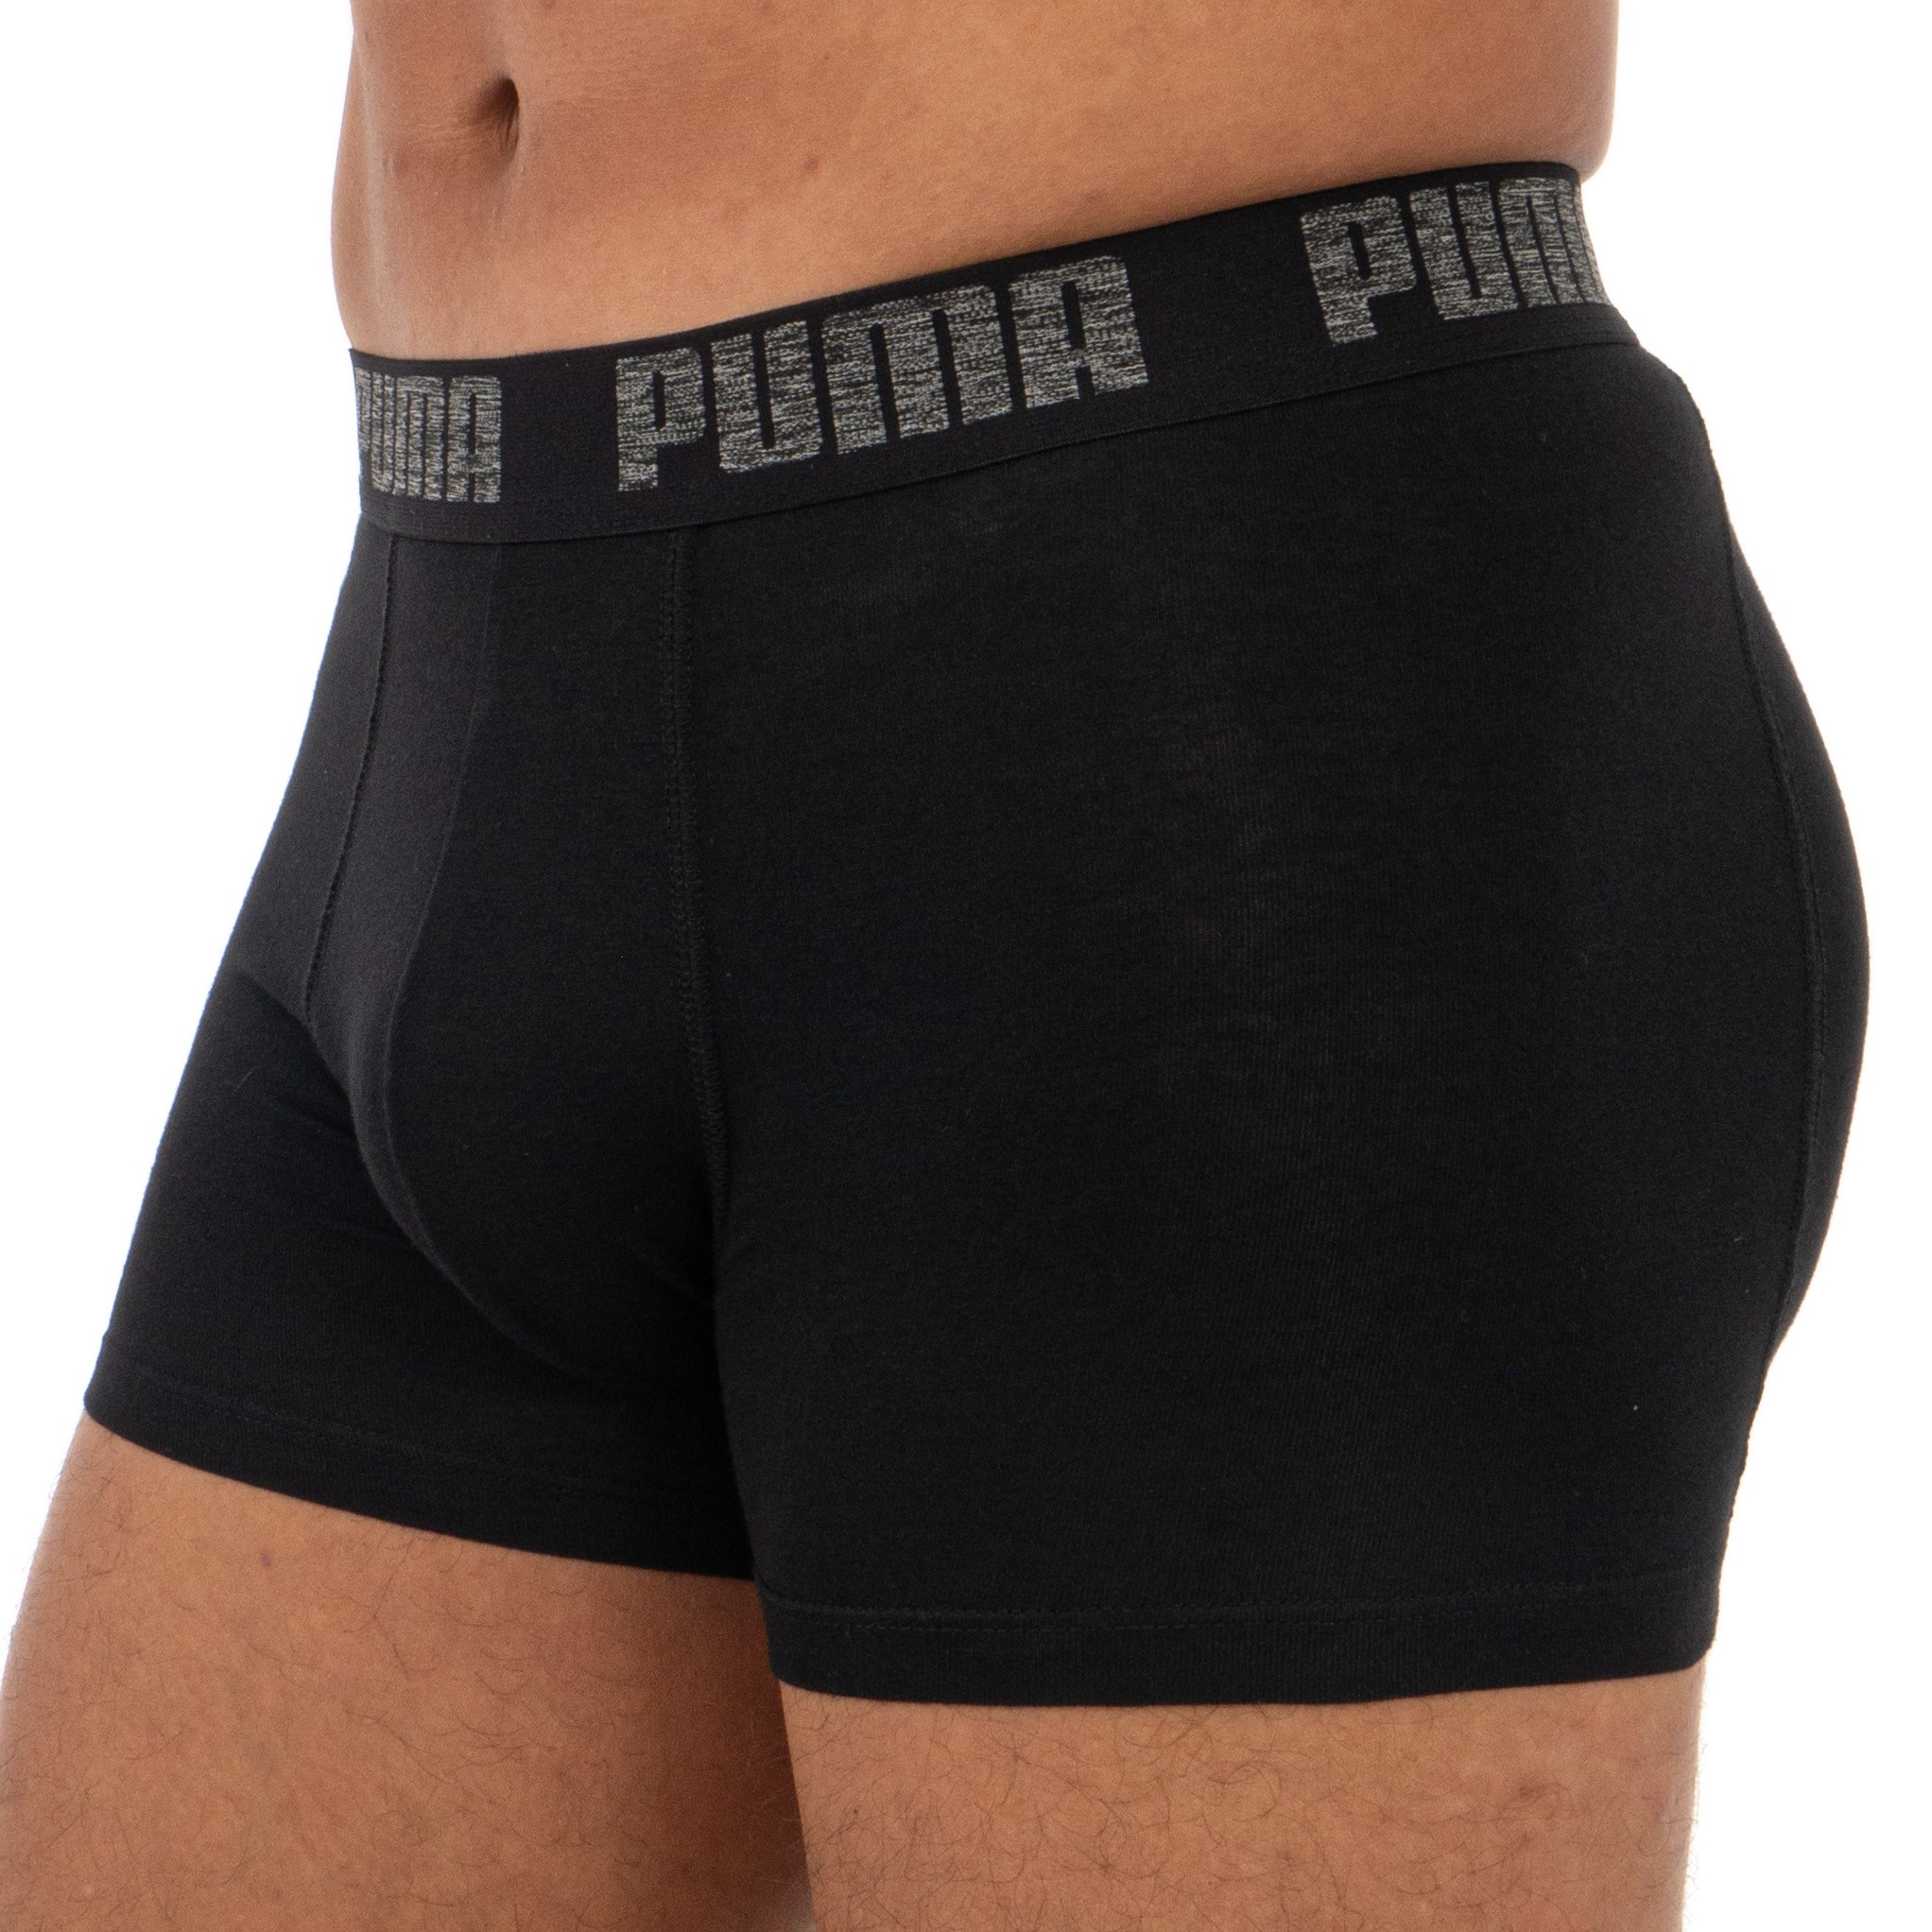 Basic Boxers 2 pack - Packs for man brand Puma for onli...